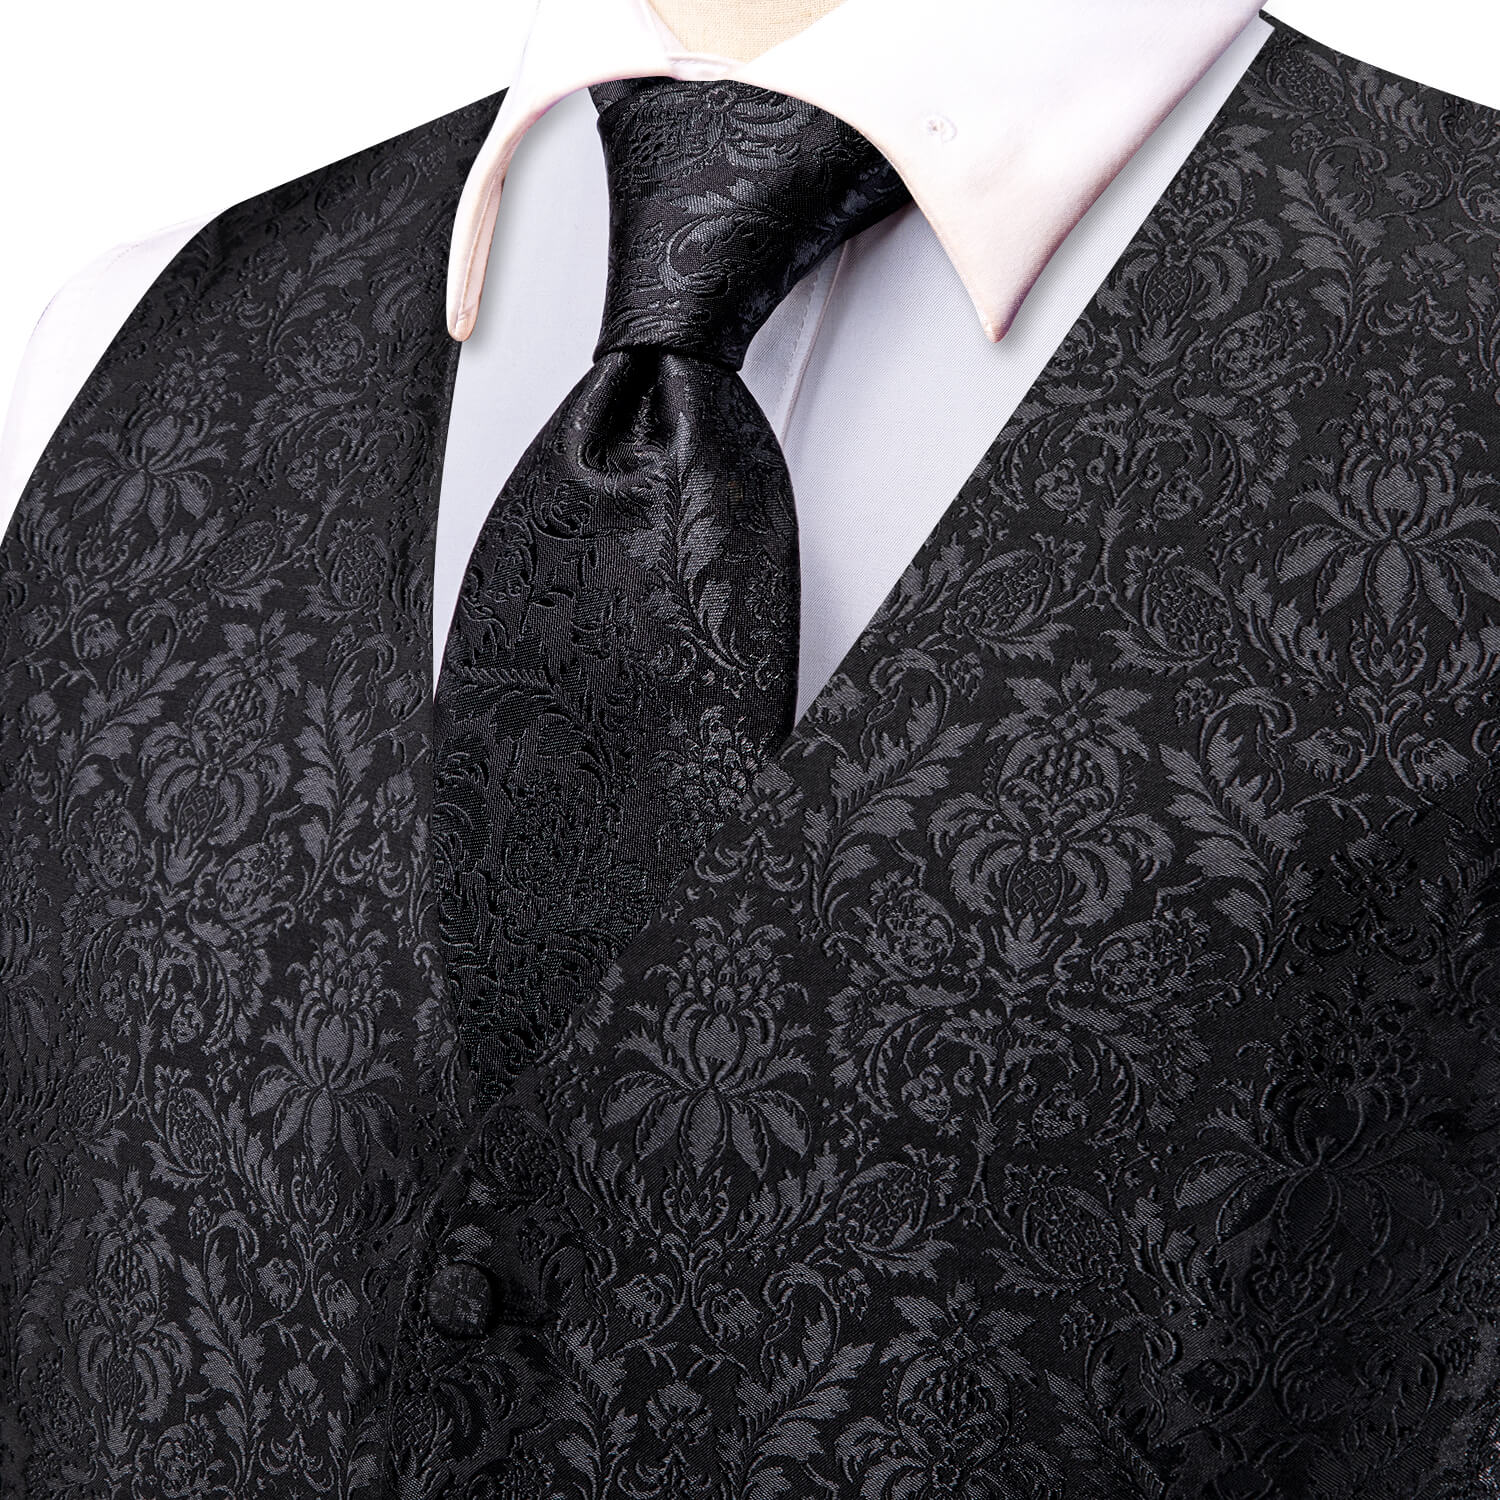 Black Jacquard Floral Mens Vest and Tie Set